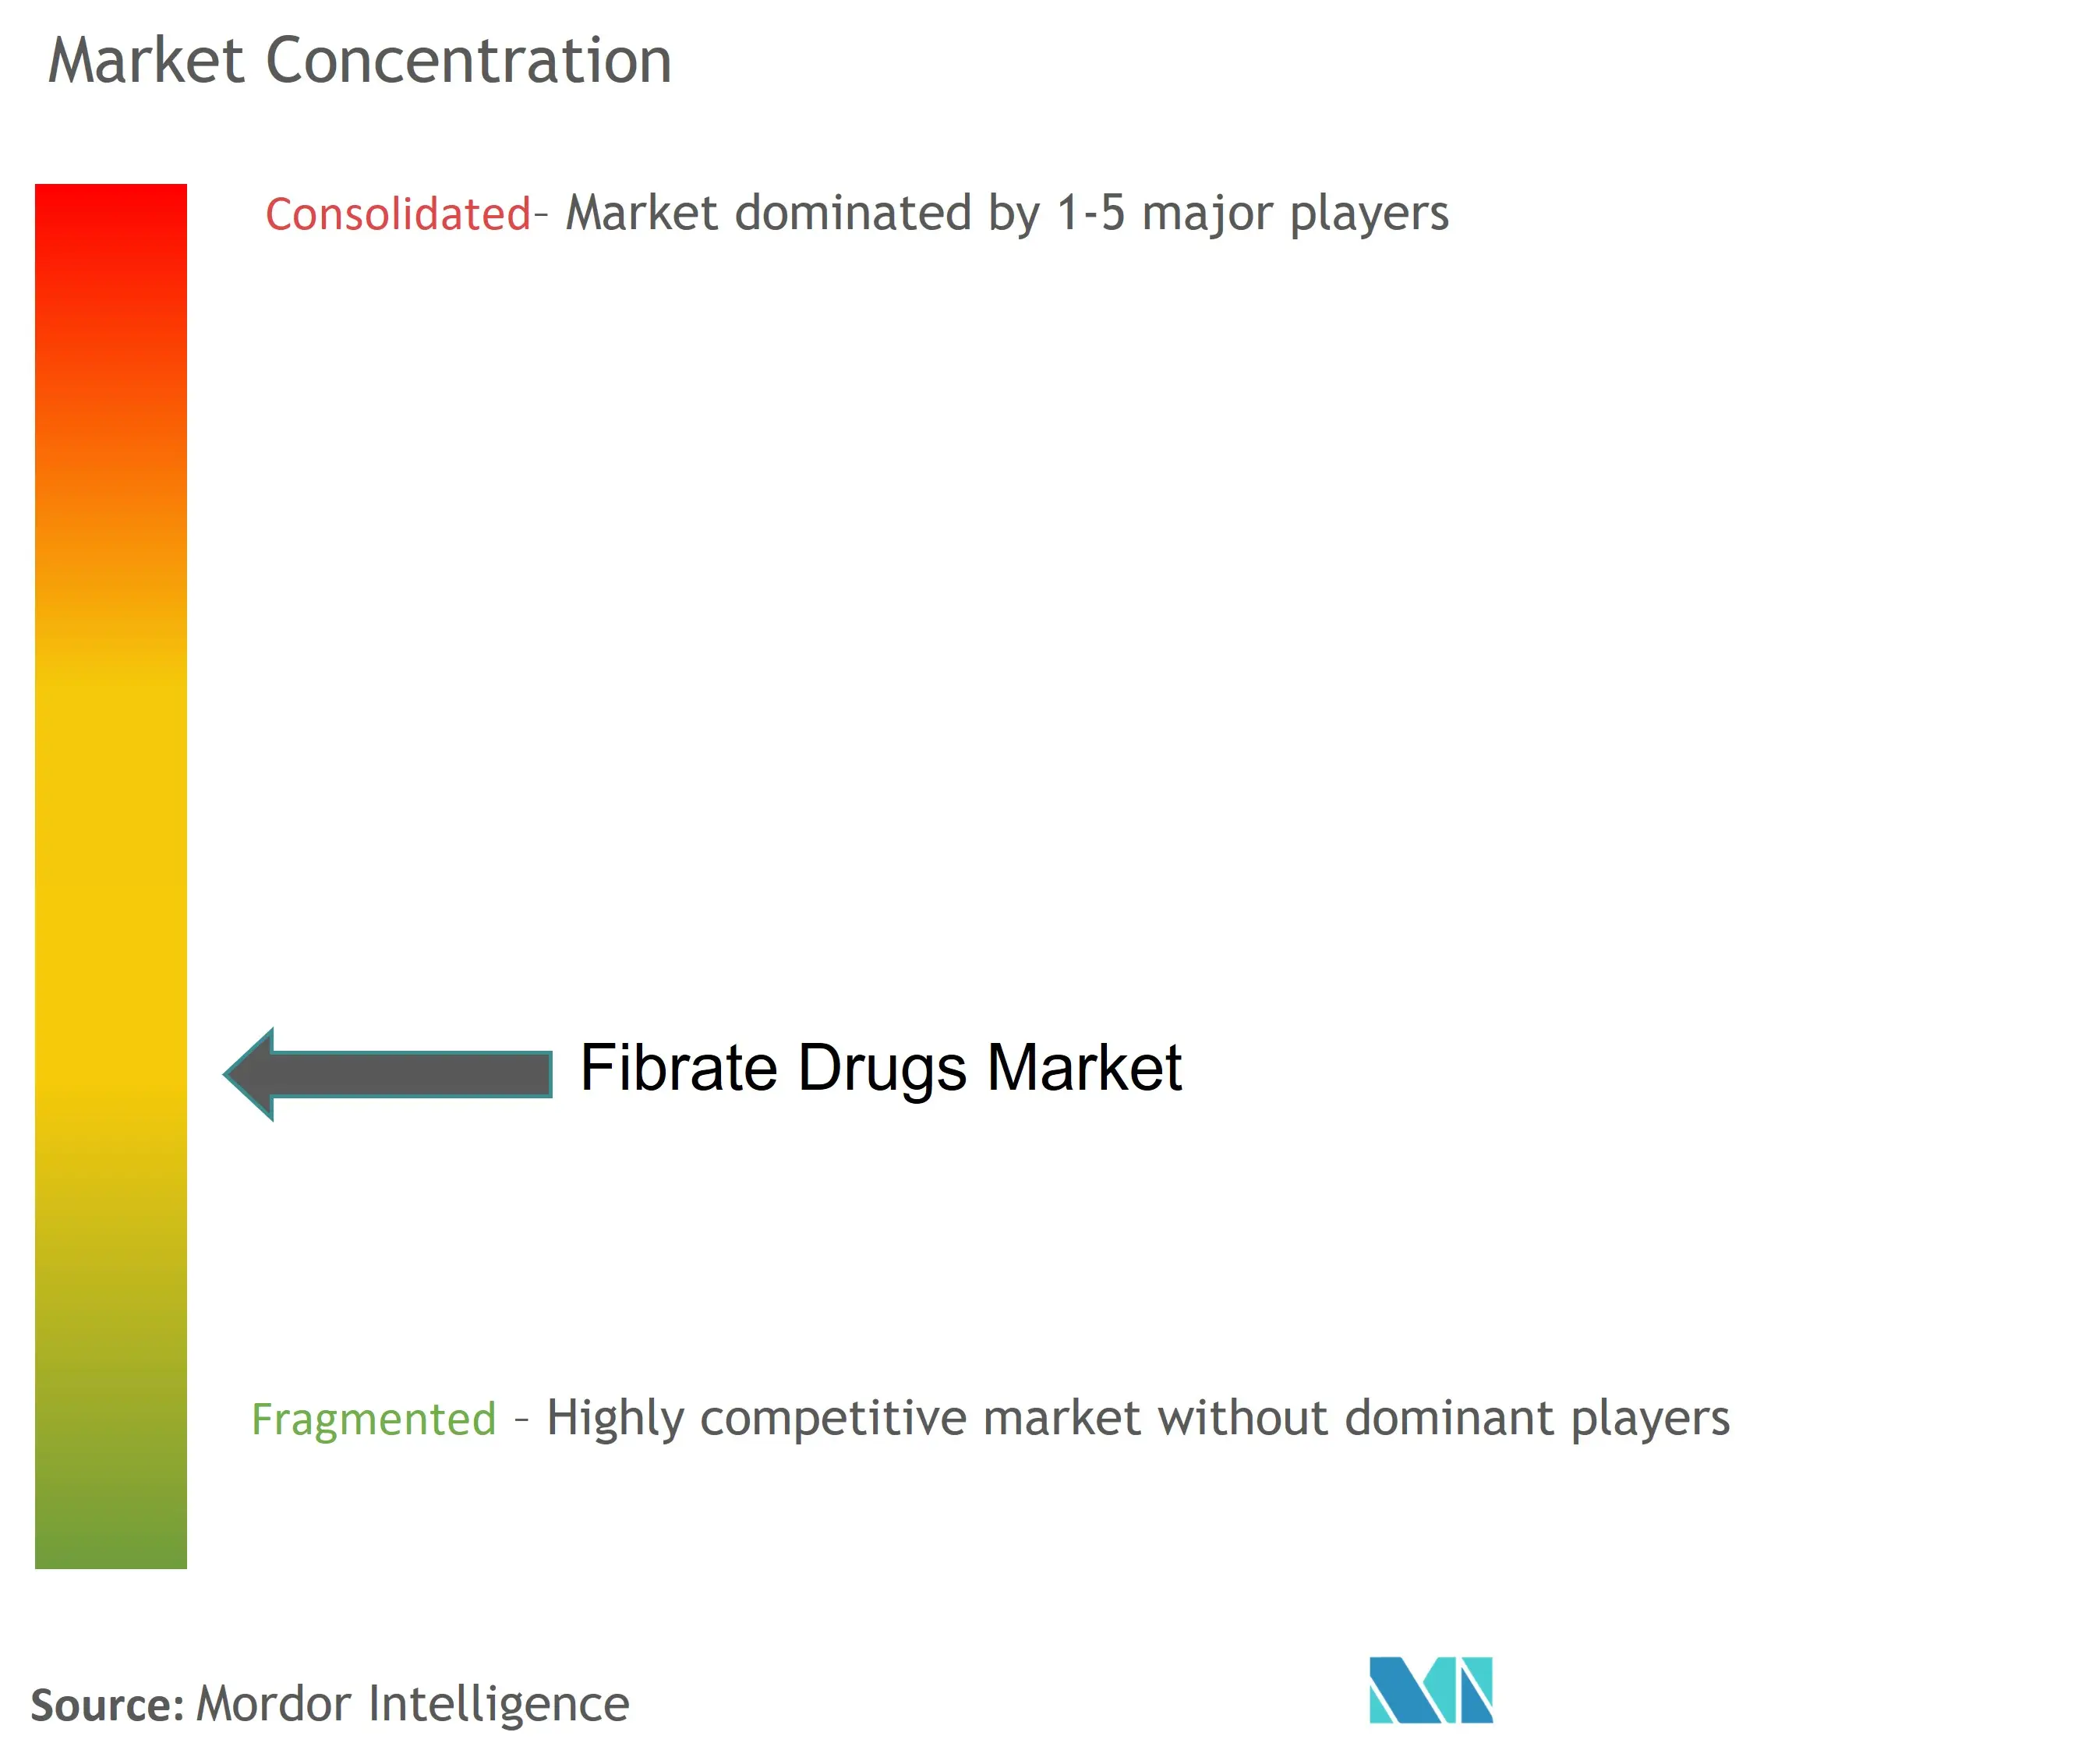 Global Fibrate Drugs Market Concentration